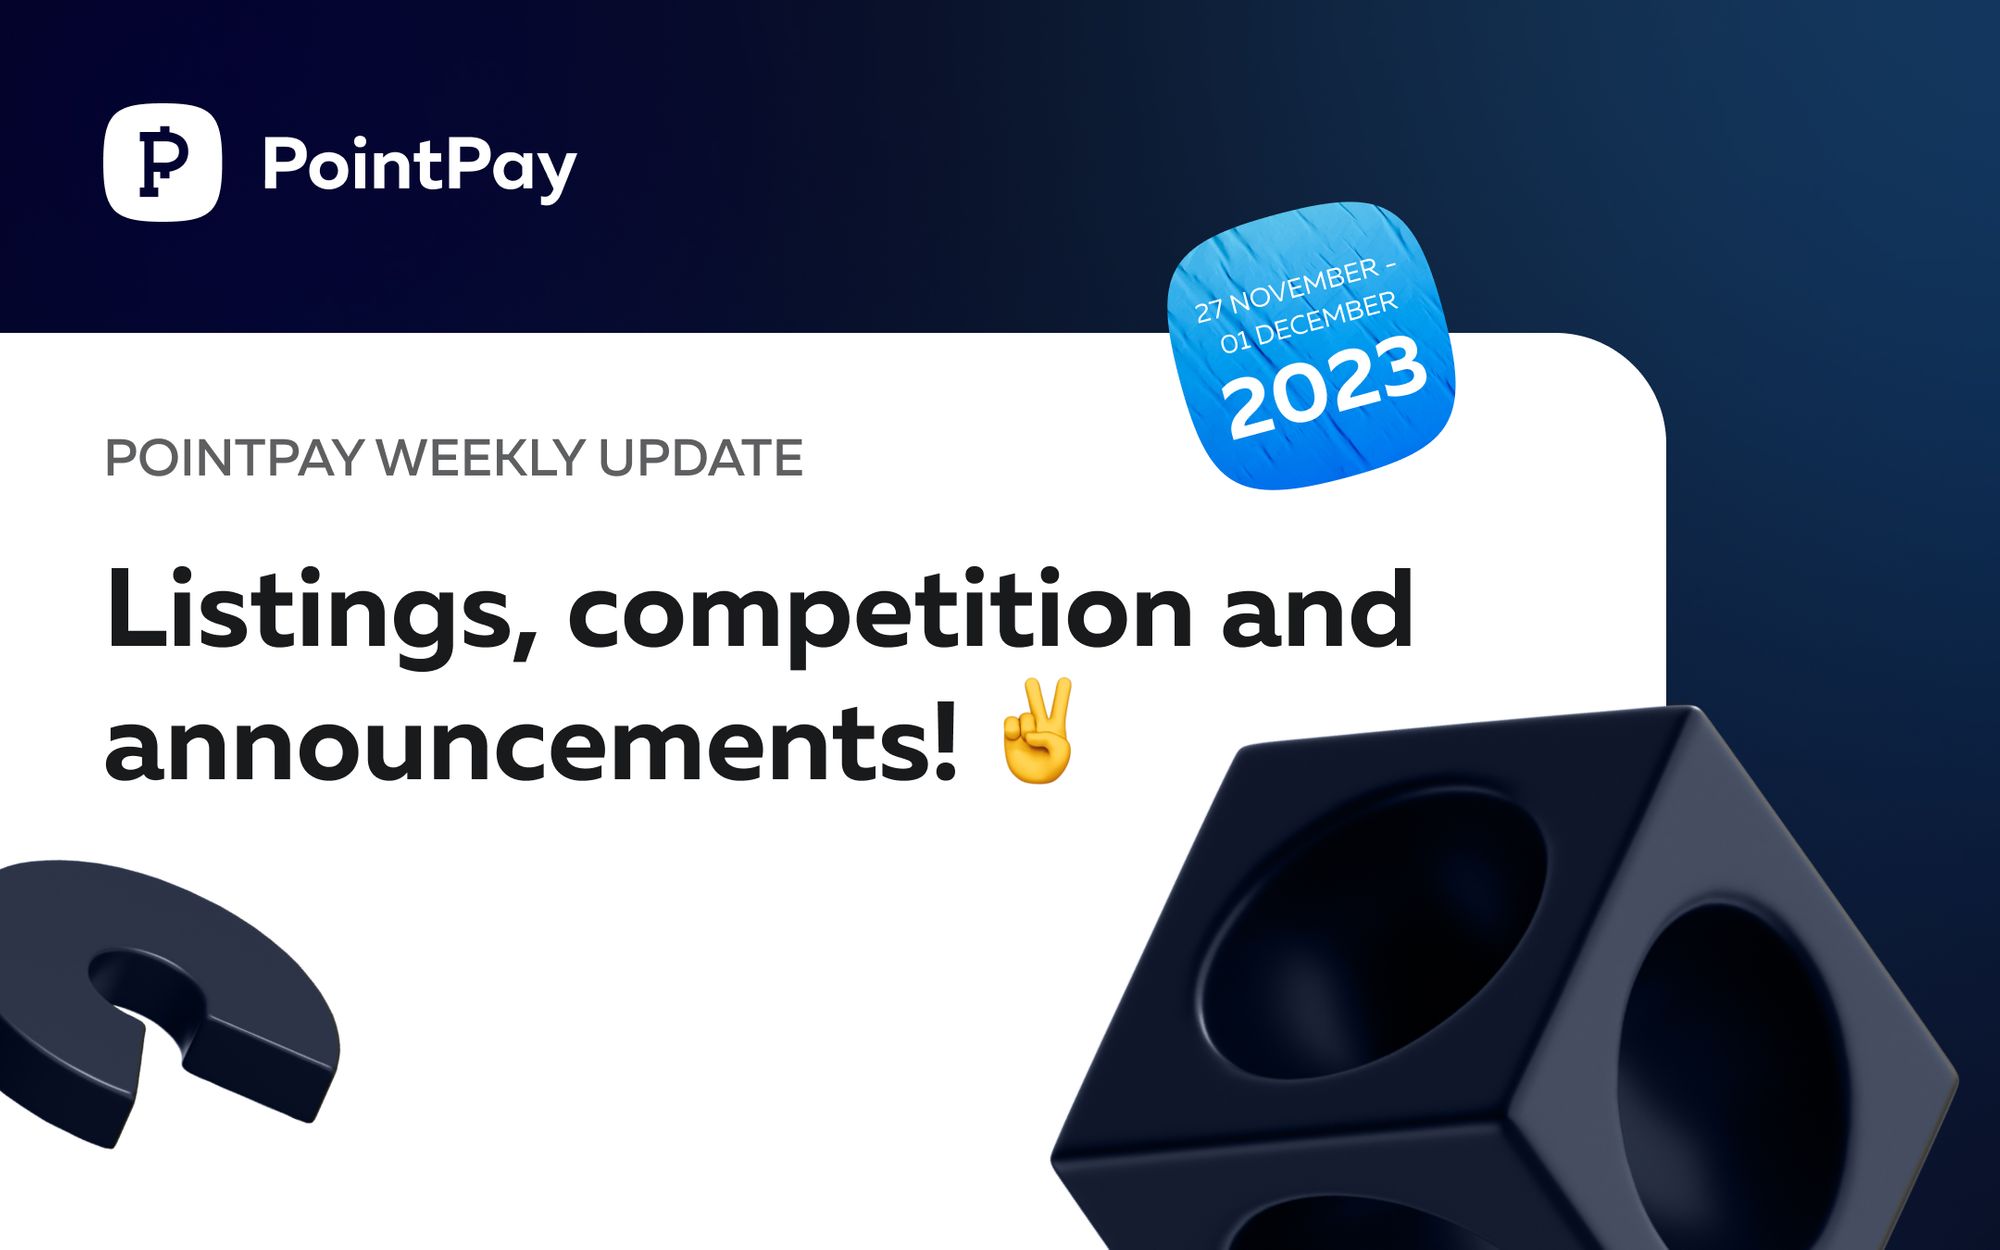 PointPay Weekly Update (27 November - 1 December 2023)